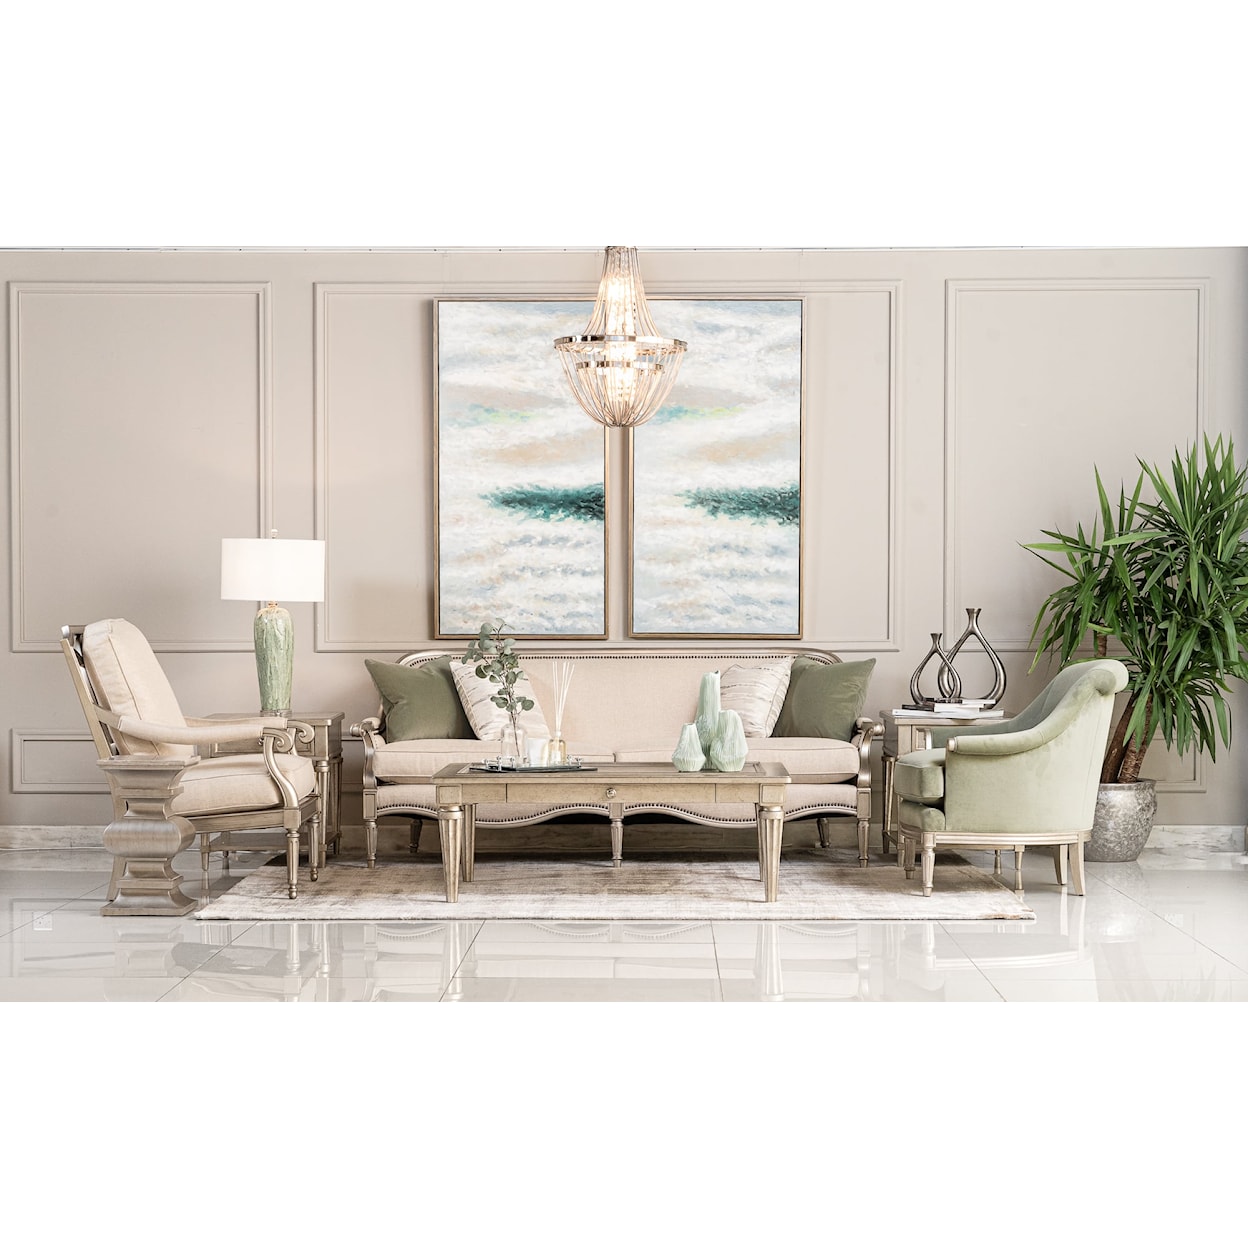 A.R.T. Furniture Inc 176 - Provenance Sofa